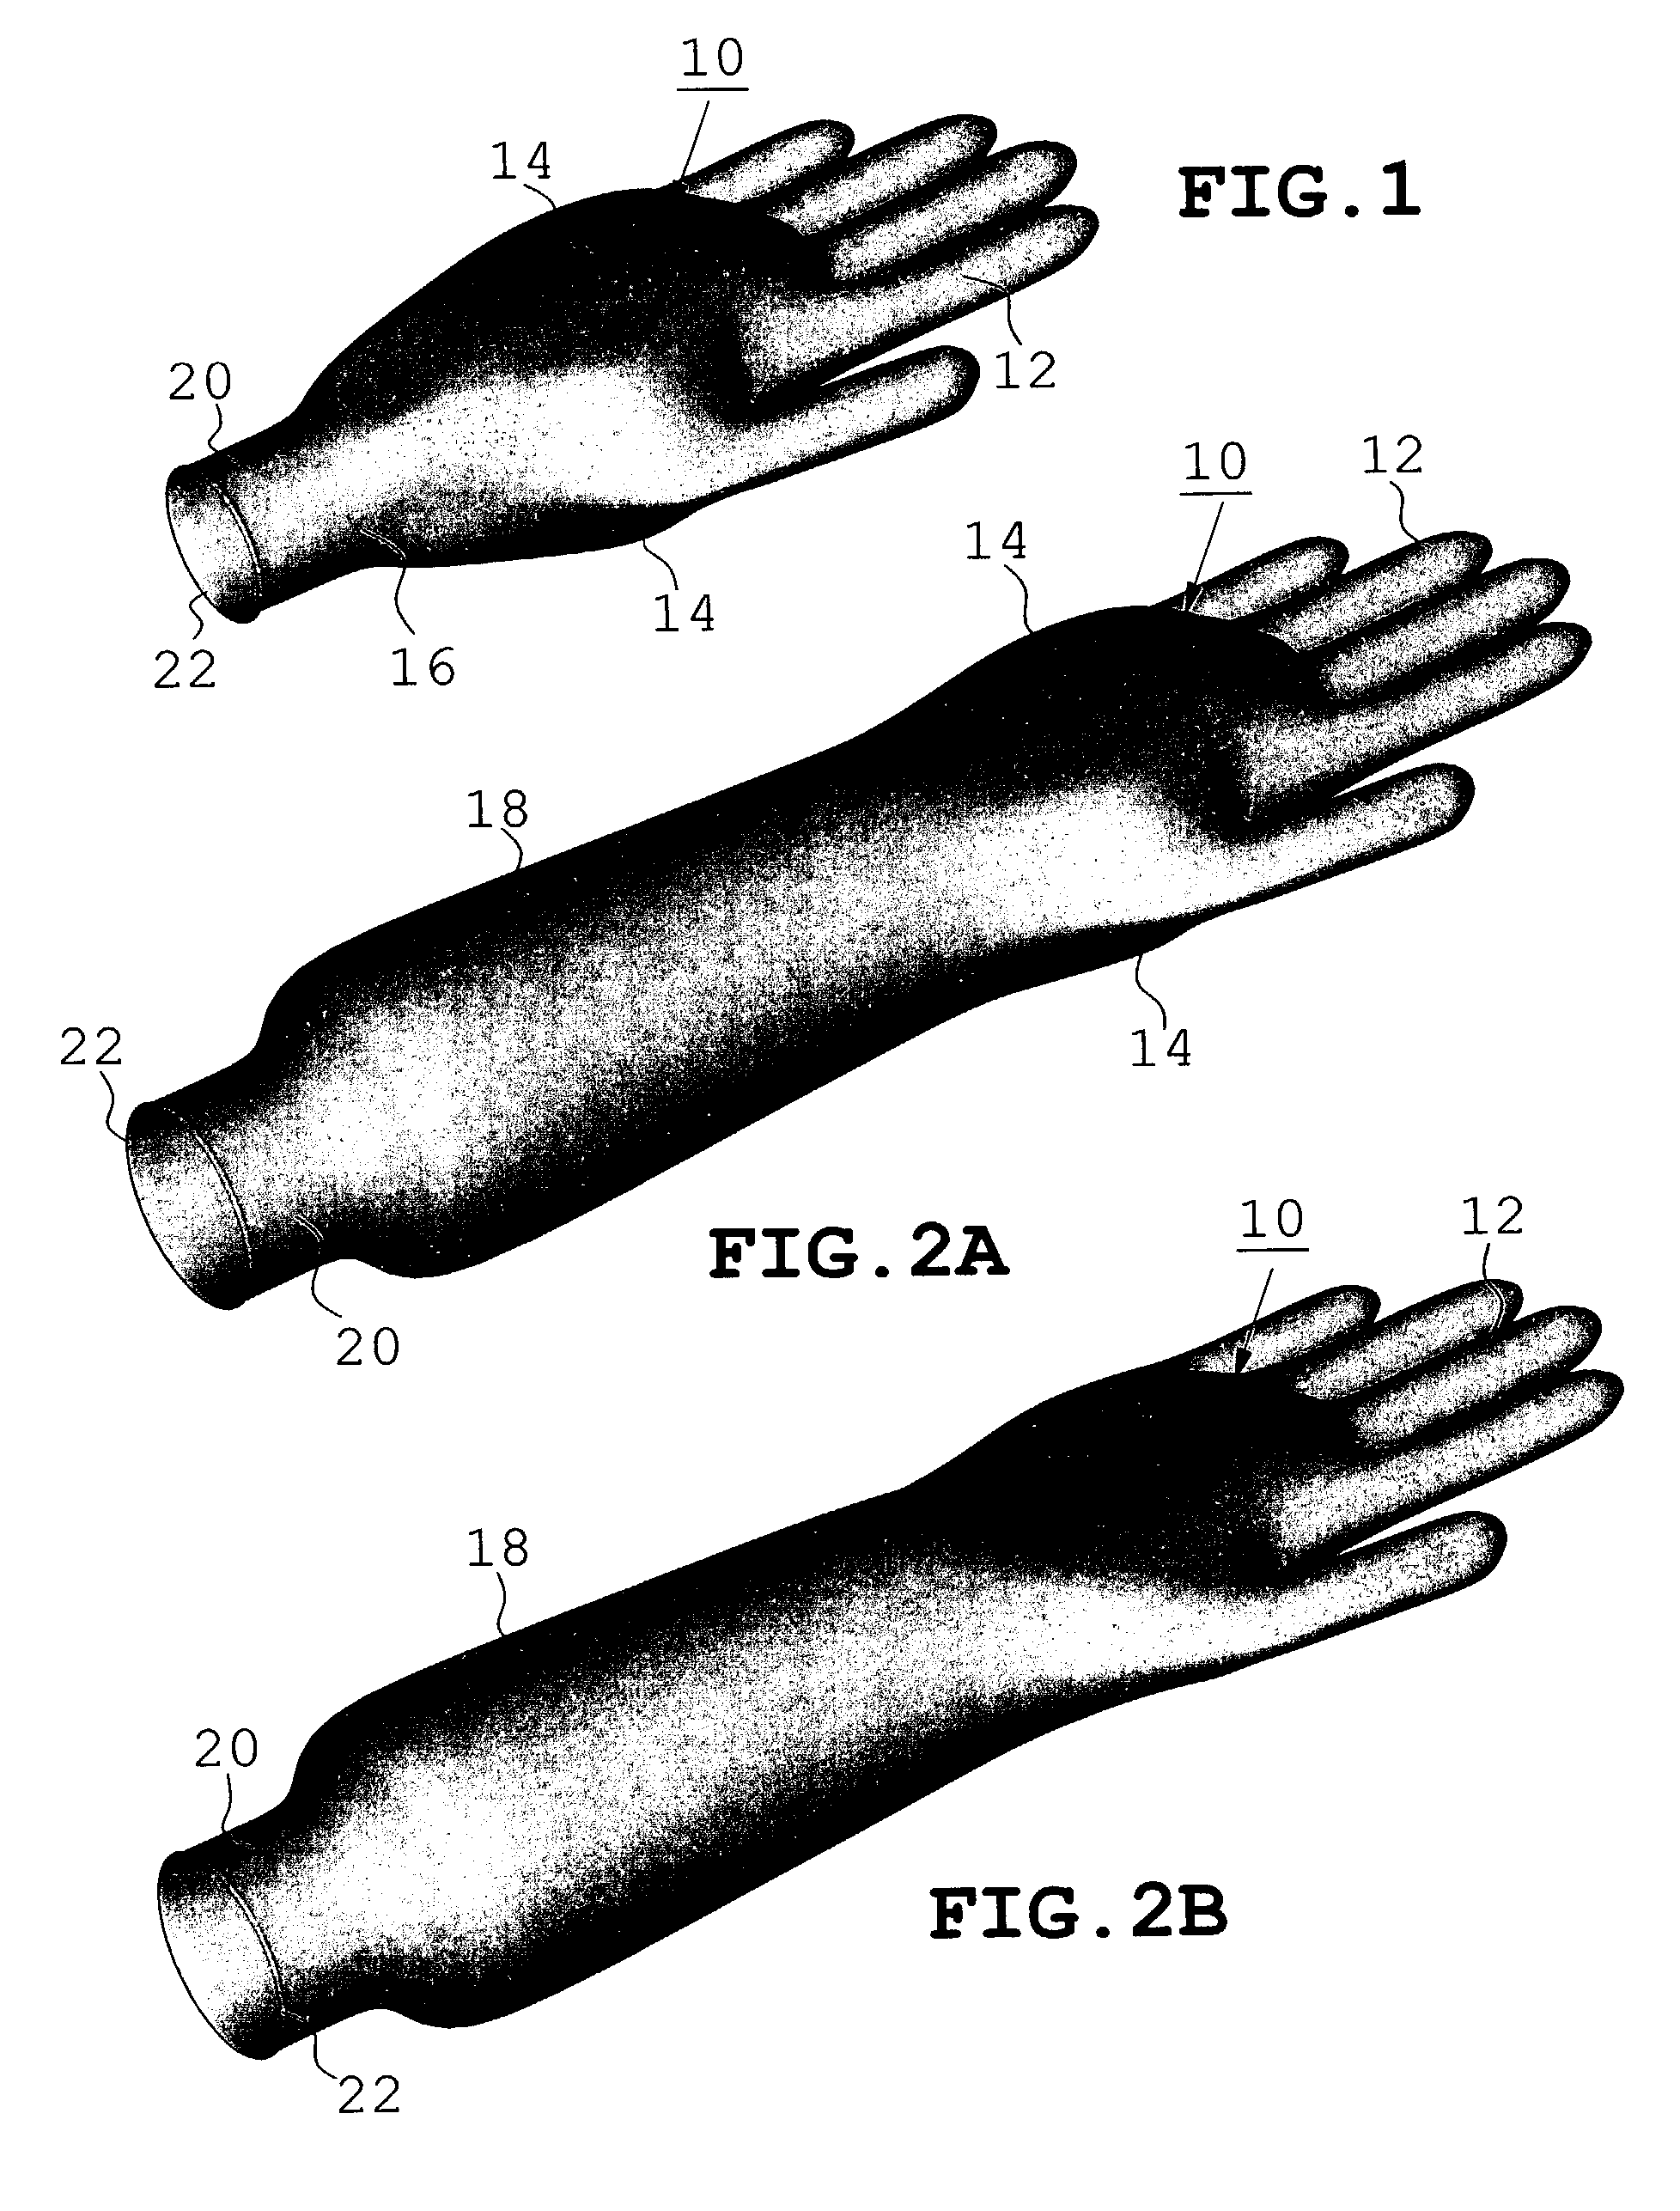 Watertight protective elastomeric gloves